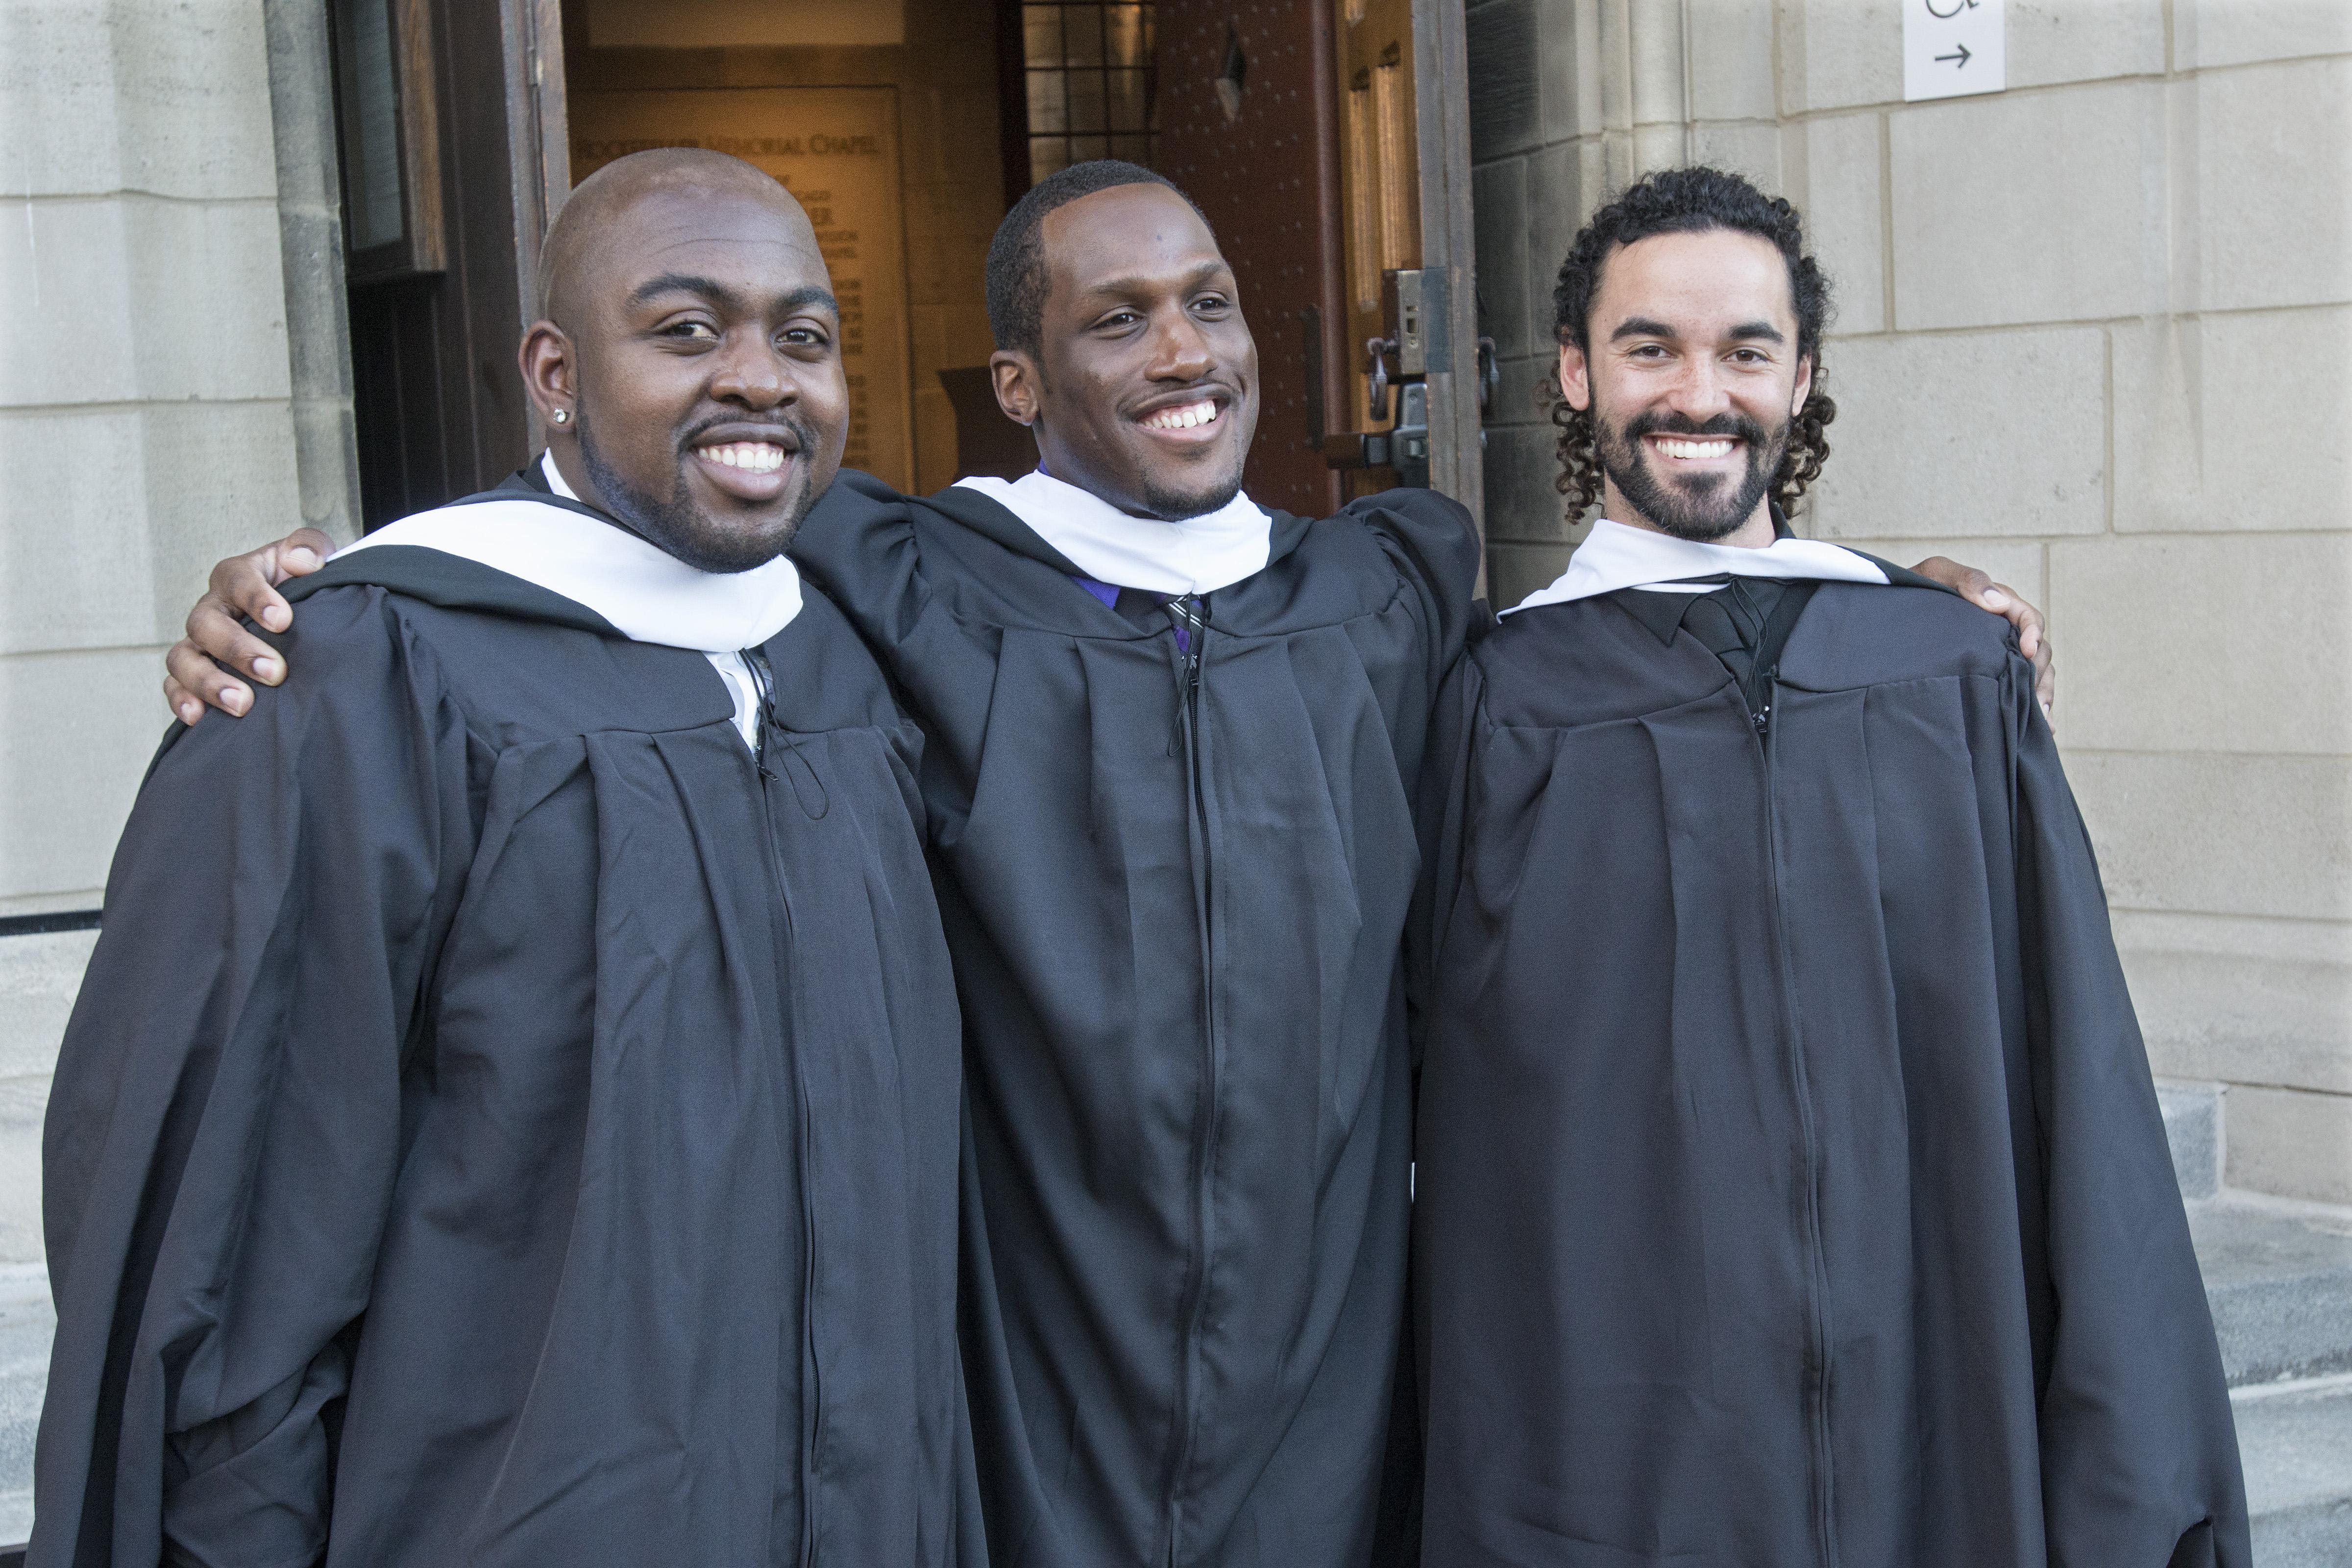 Group of men in black robes smiling